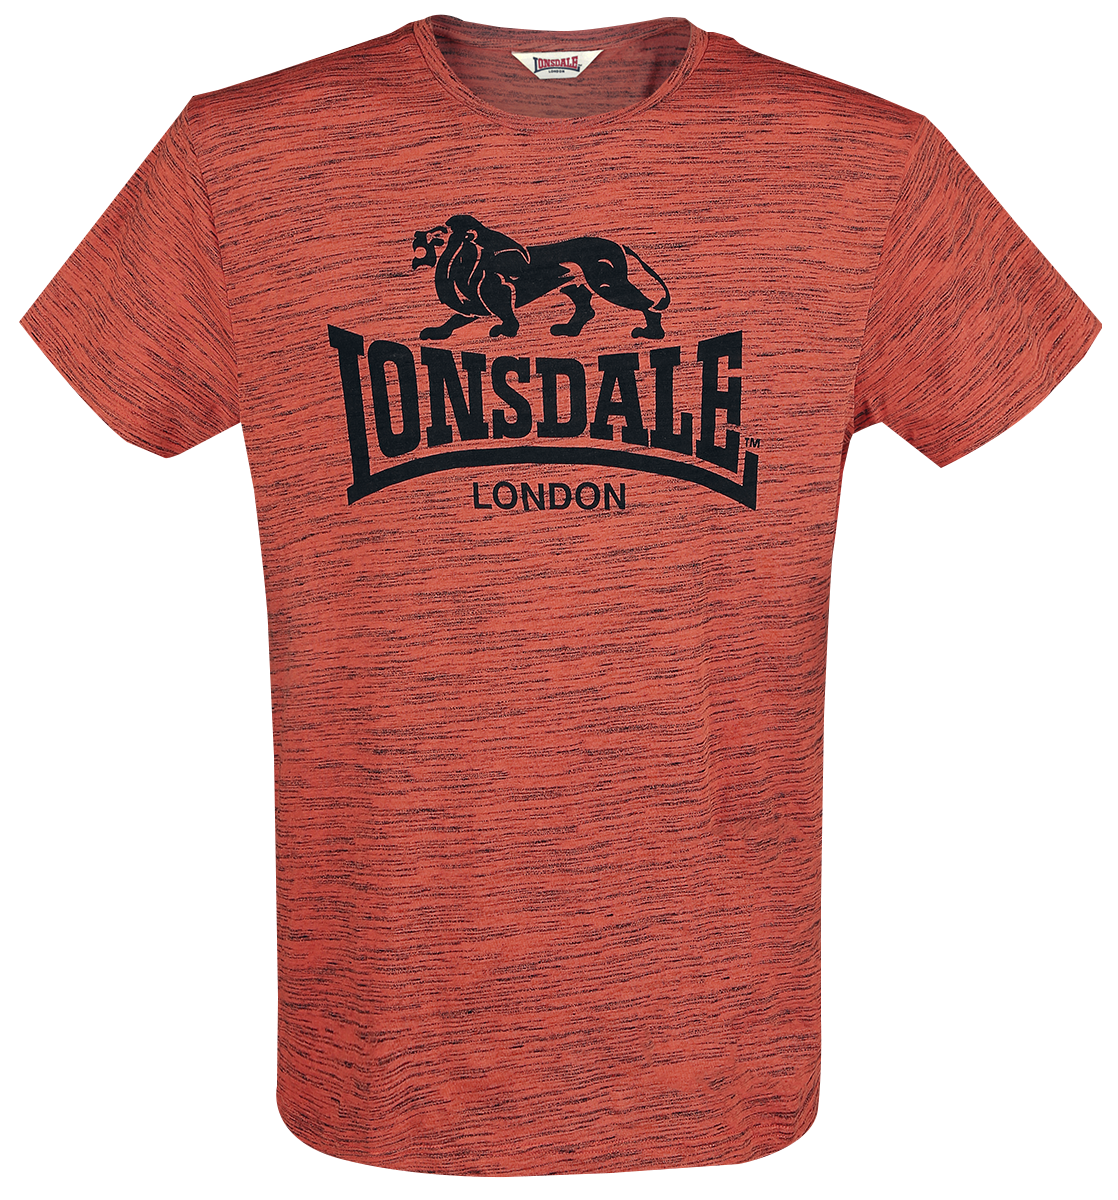 Lonsdale London - Gargrave - T-Shirt - orange| schwarz